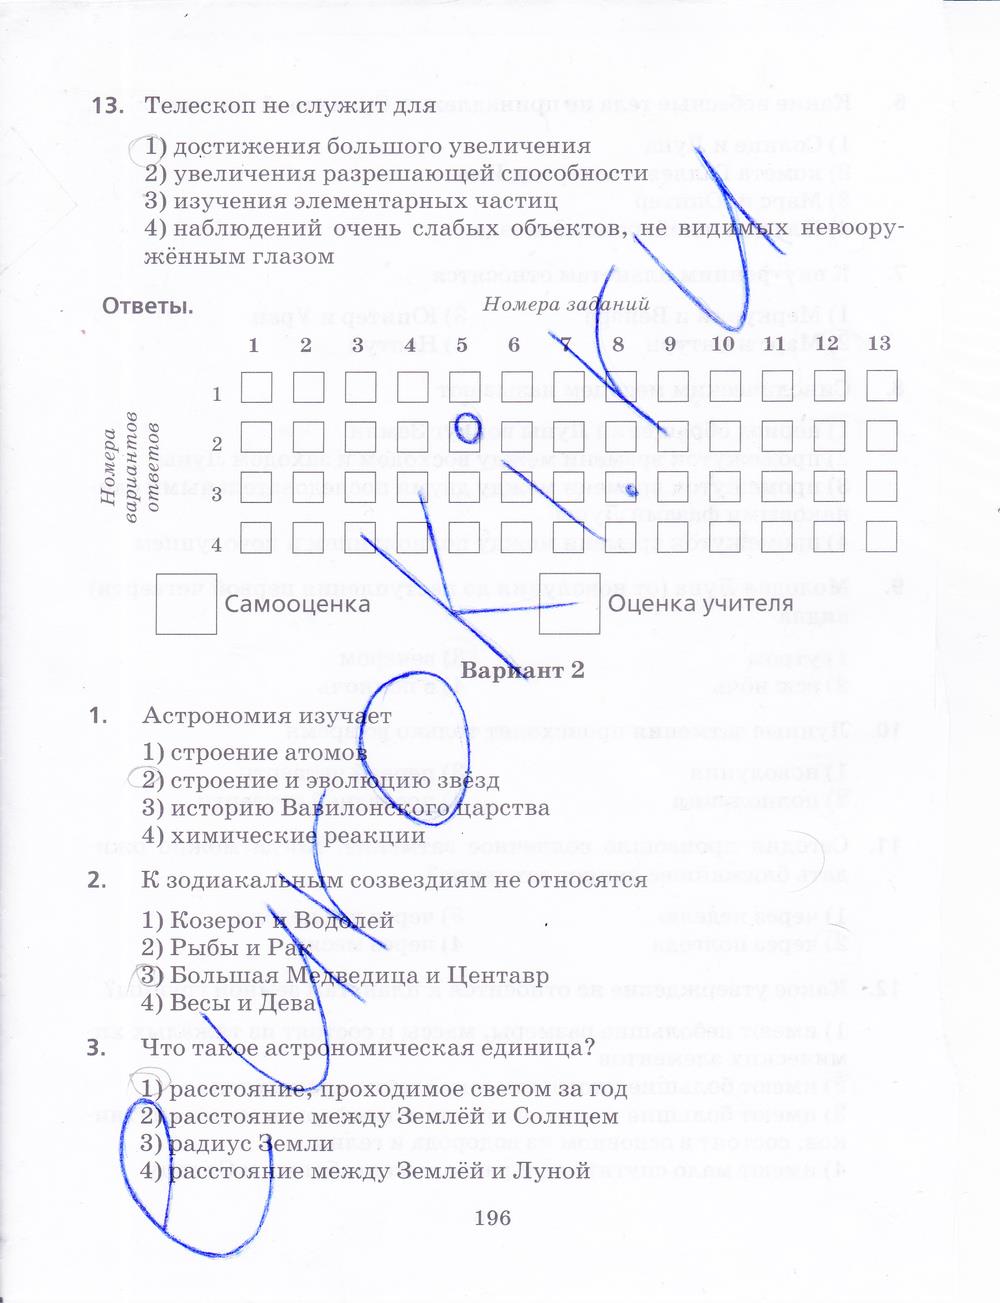 гдз 9 класс рабочая тетрадь страница 196 физика Пурышева, Важеевская, Чаругин